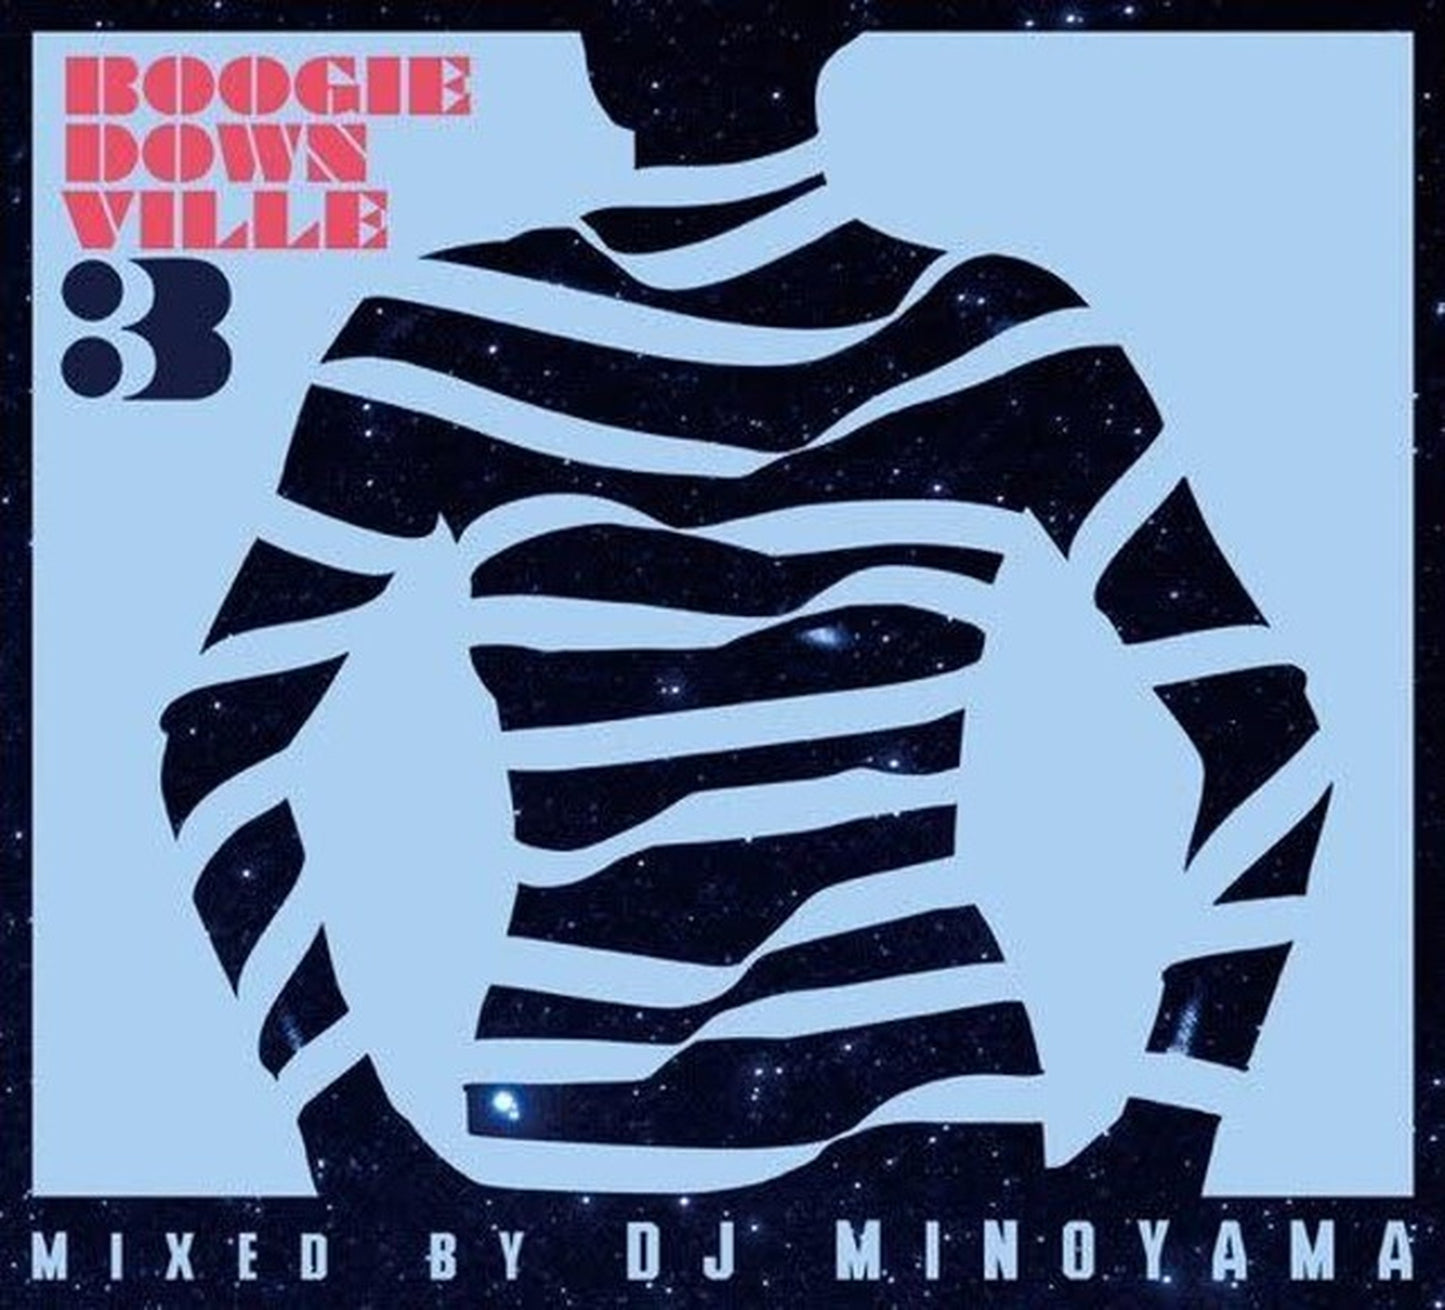 【CD】DJ MINOYAMA - Boogiedownville Vol. 3